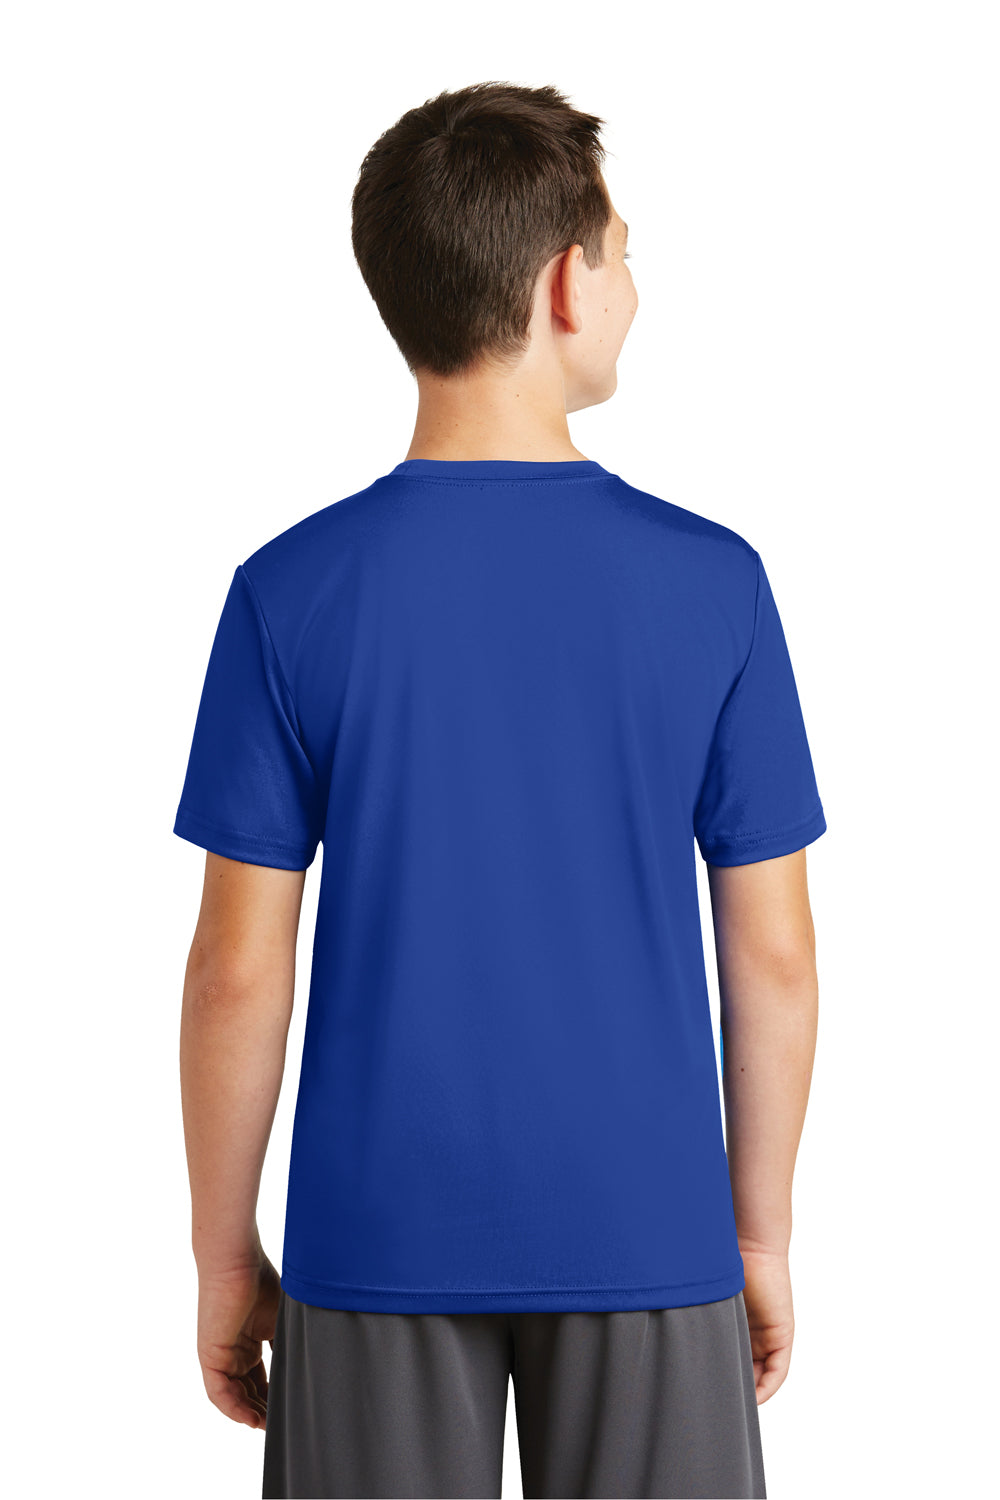 Sport-Tek YST320 Youth Tough Moisture Wicking Short Sleeve Crewneck T-Shirt Royal Blue Back